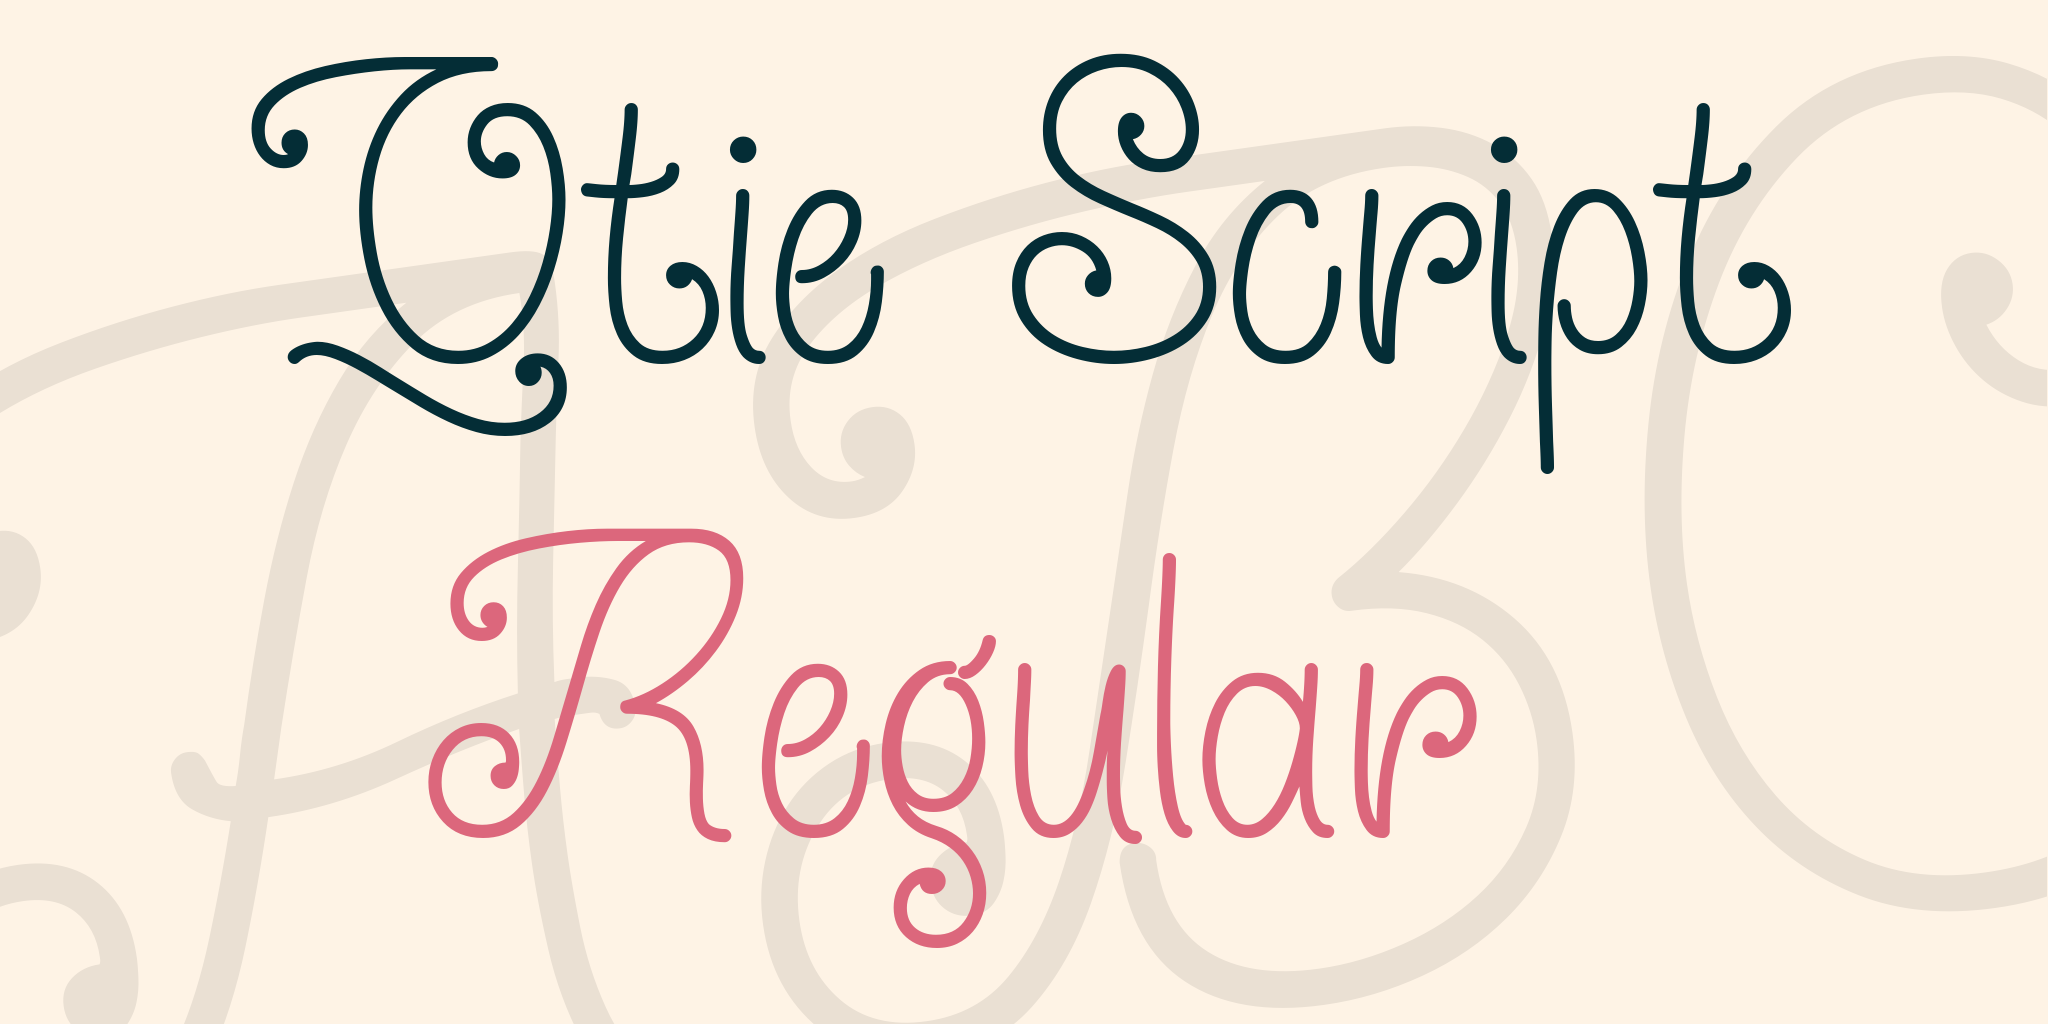 Qtie Script